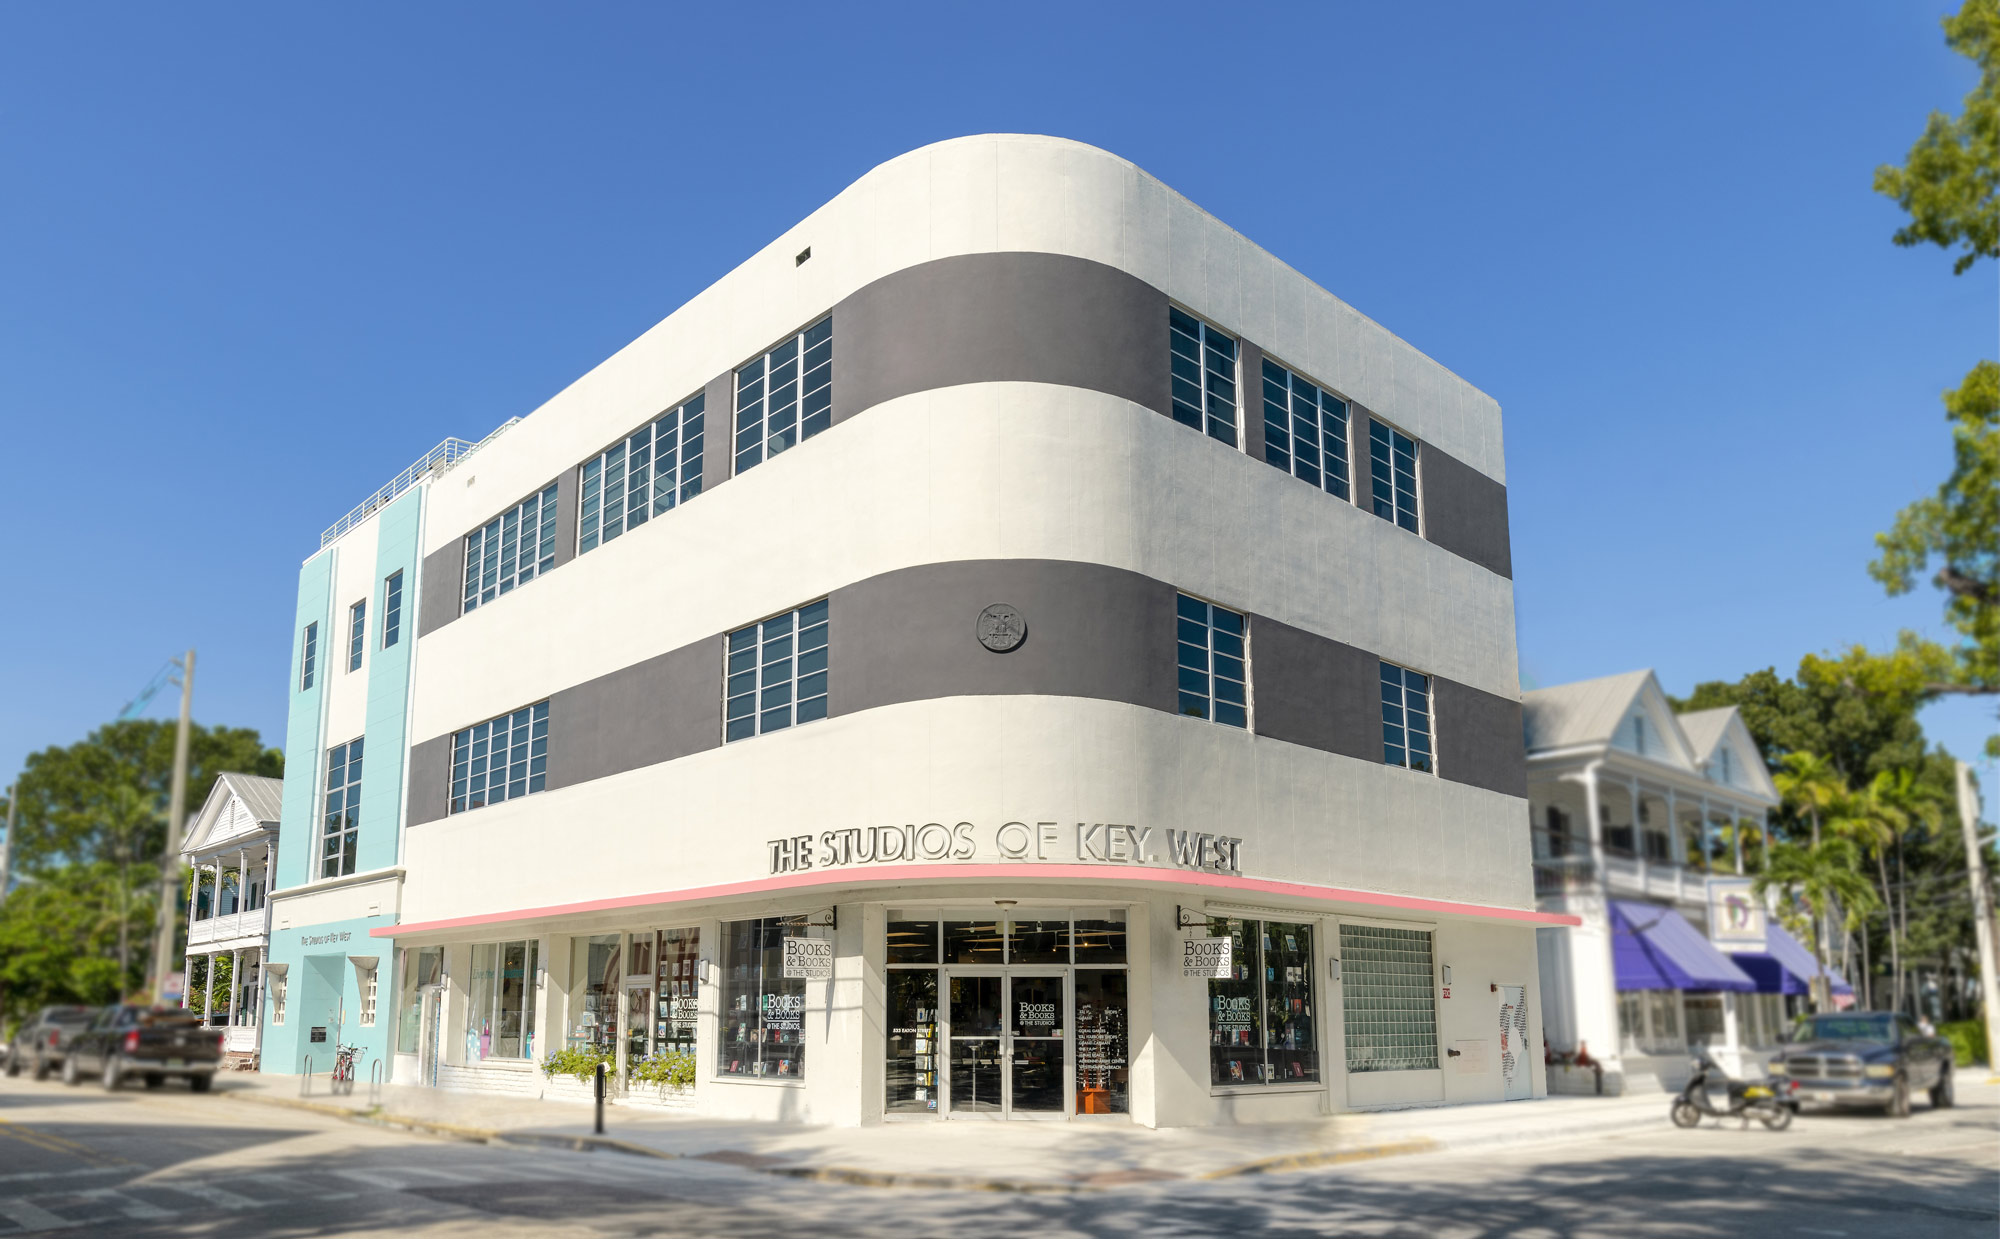 photo of Studios of Key West art deco building